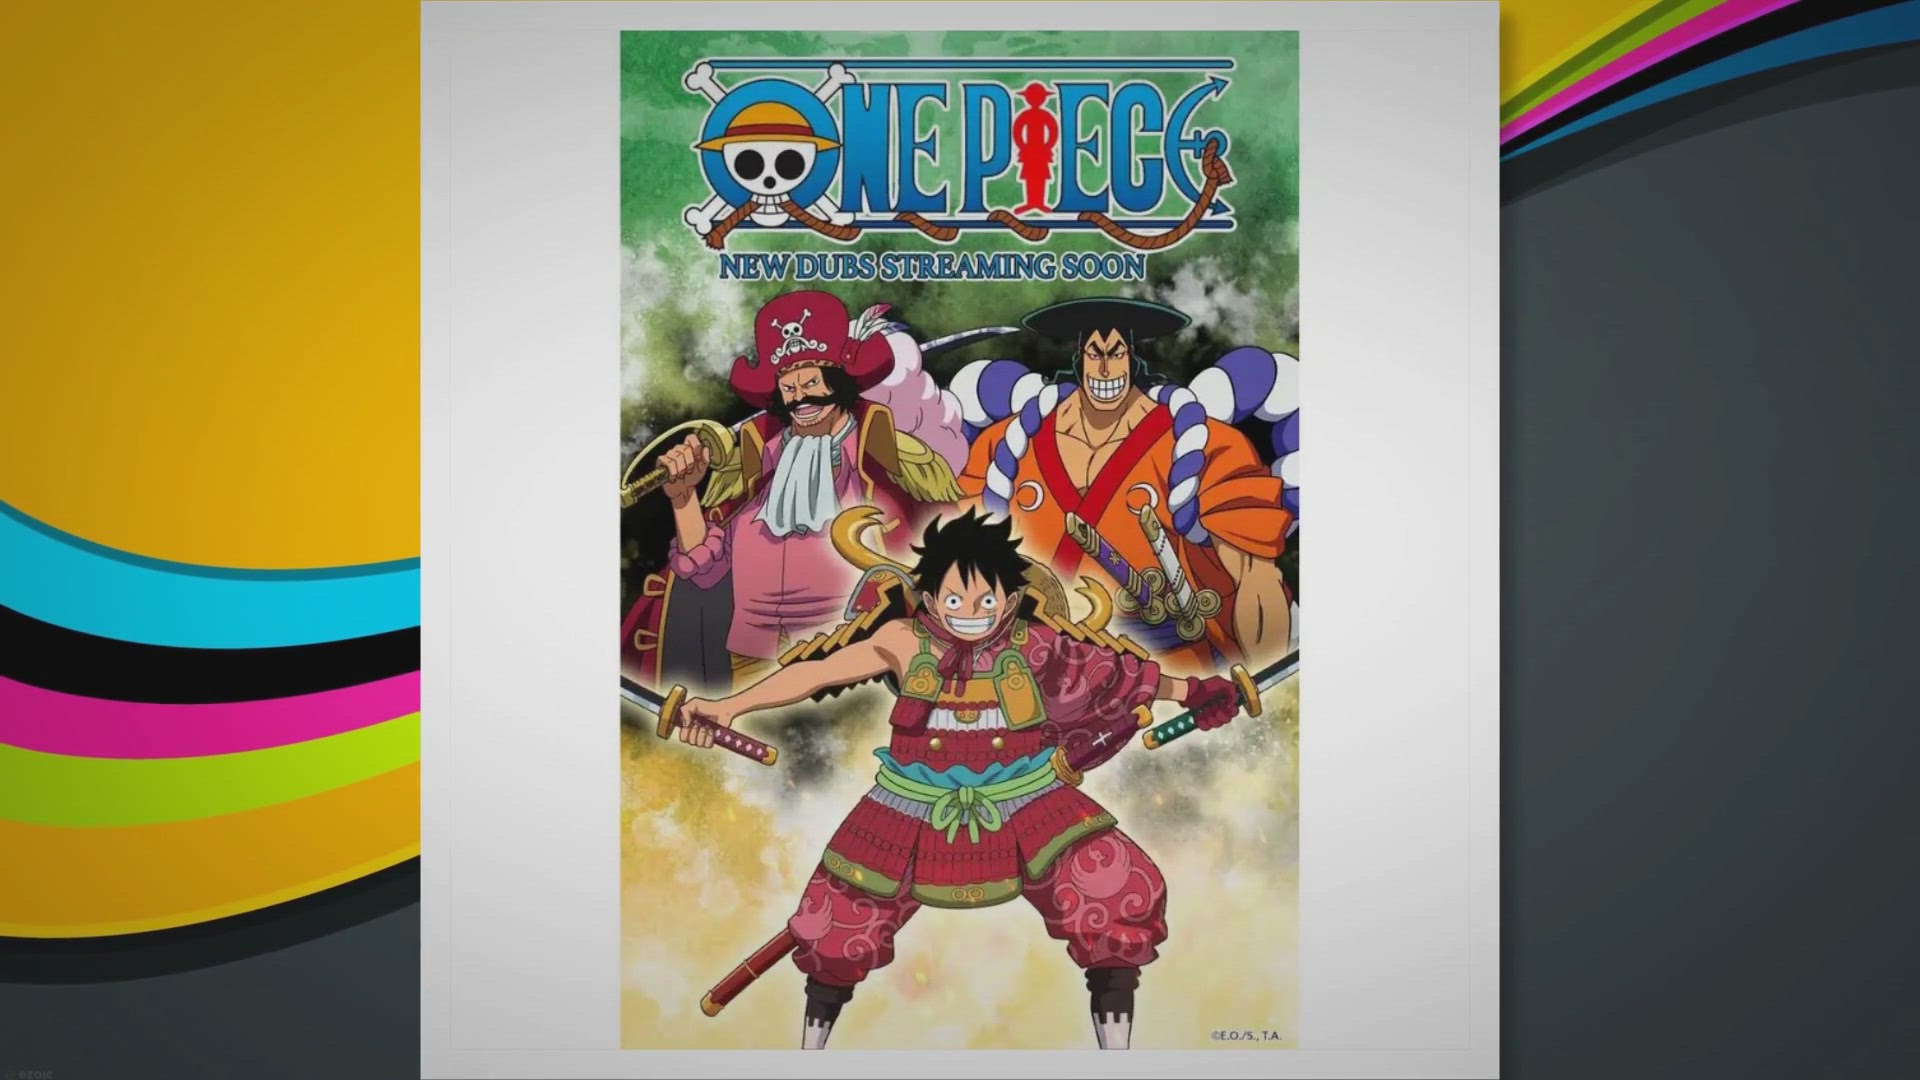 One Piece: WANO KUNI (892-Current) Sanji's Mutation – The Two Arms